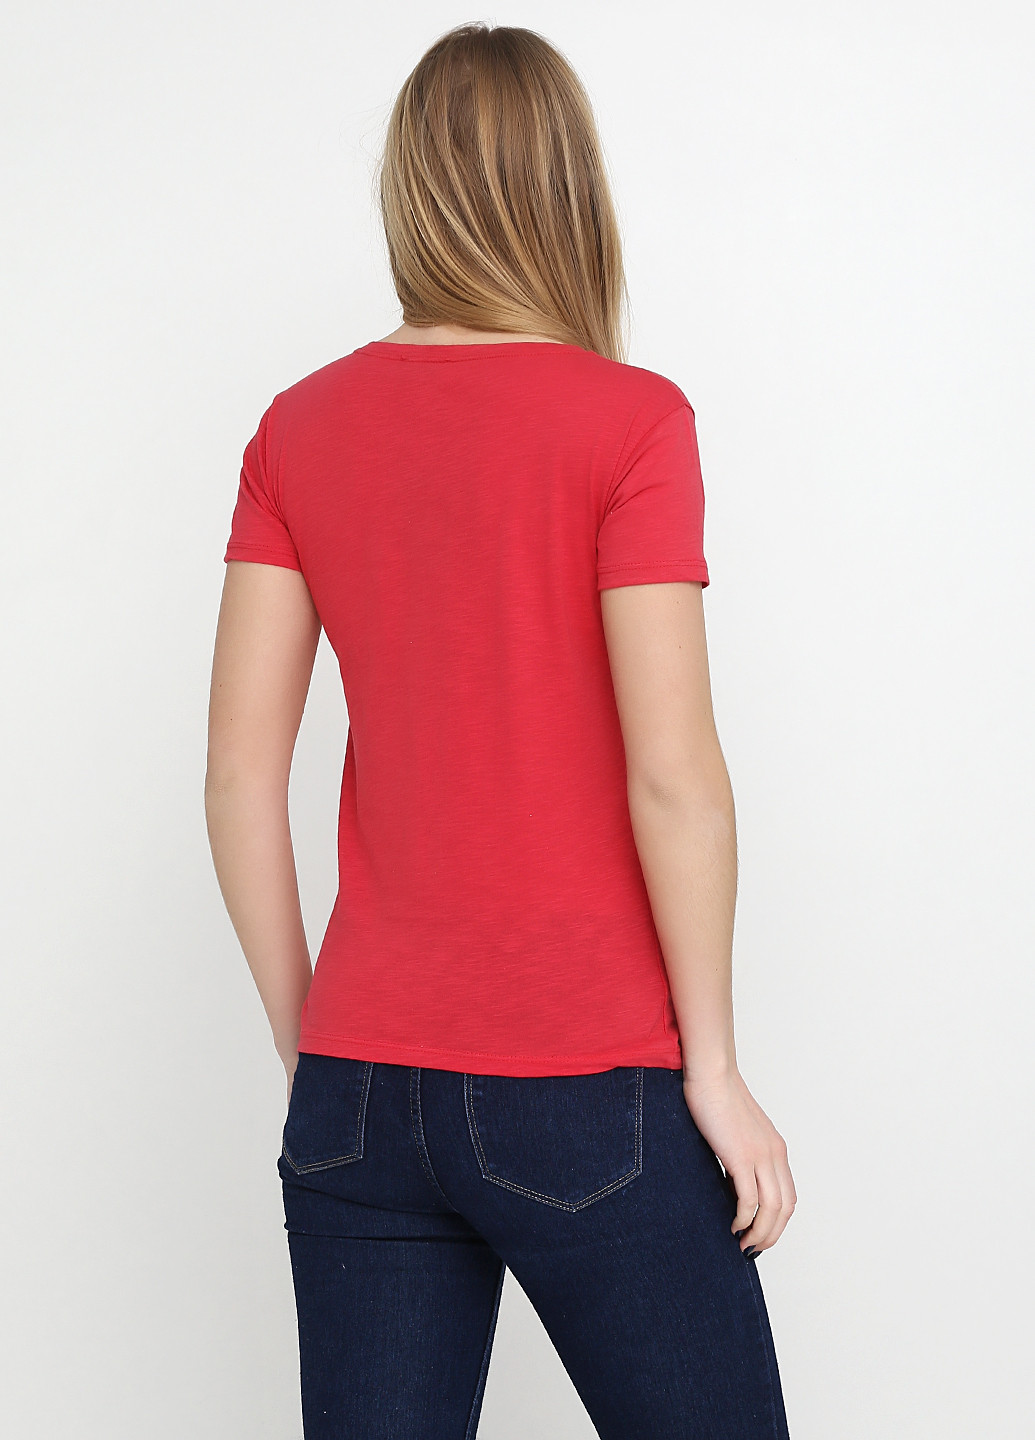 Светло-красная летняя футболка Spora